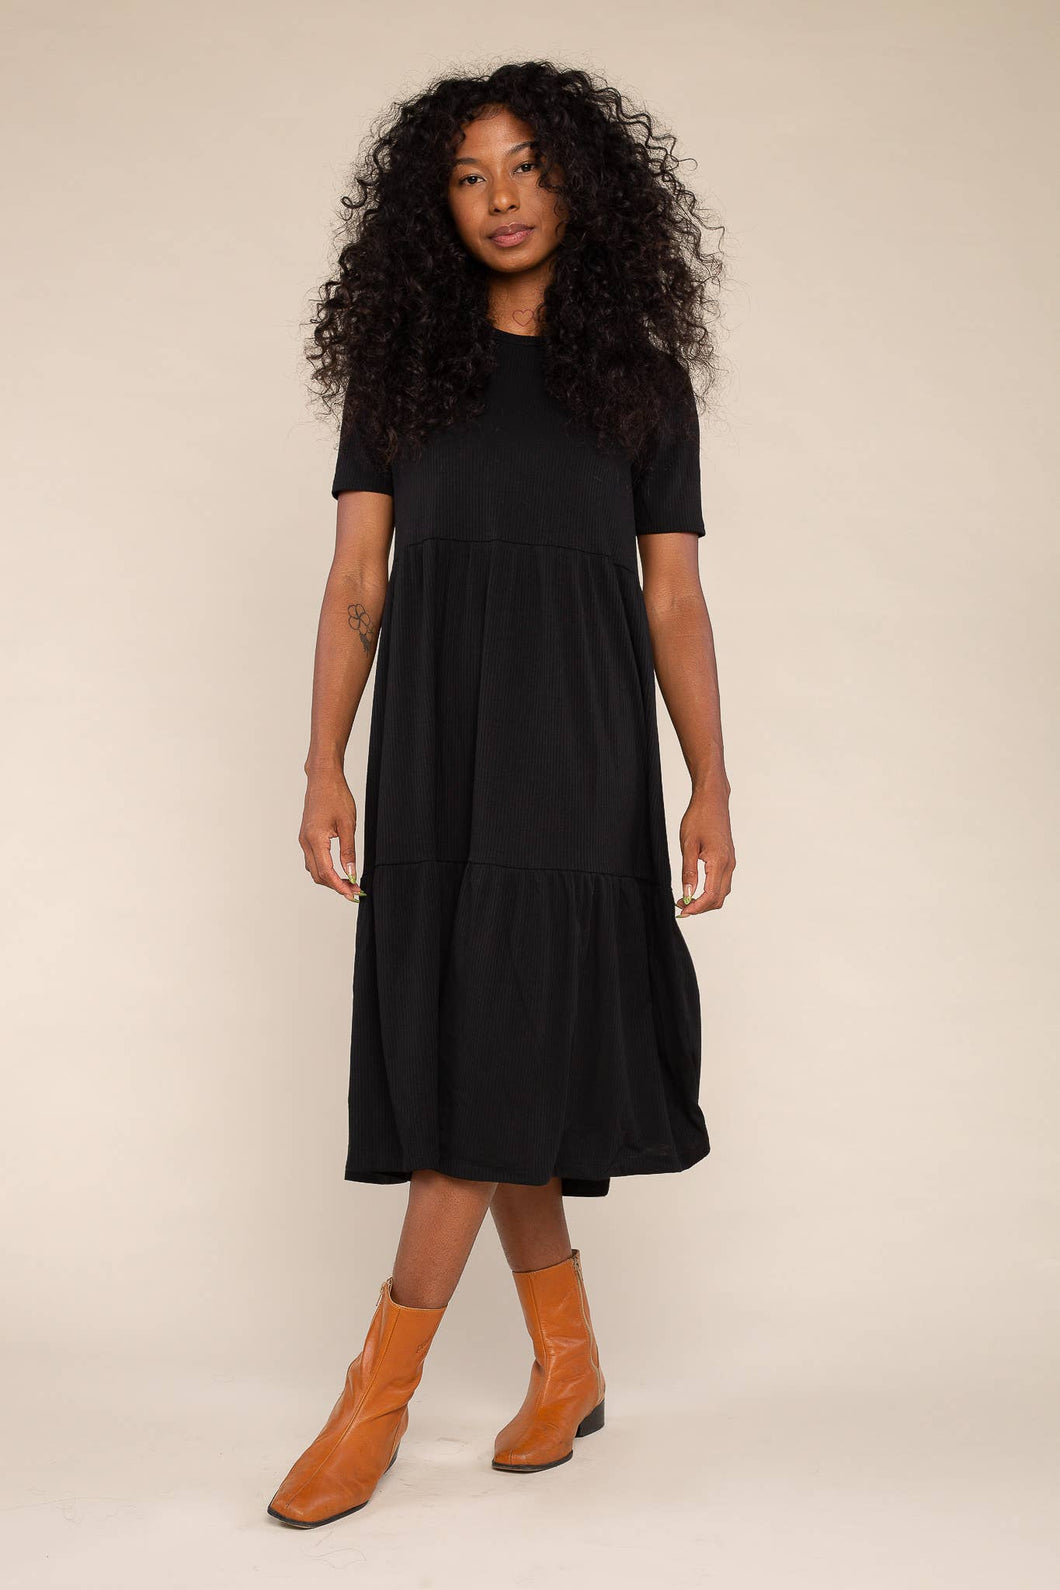 Clementine Dress, Black